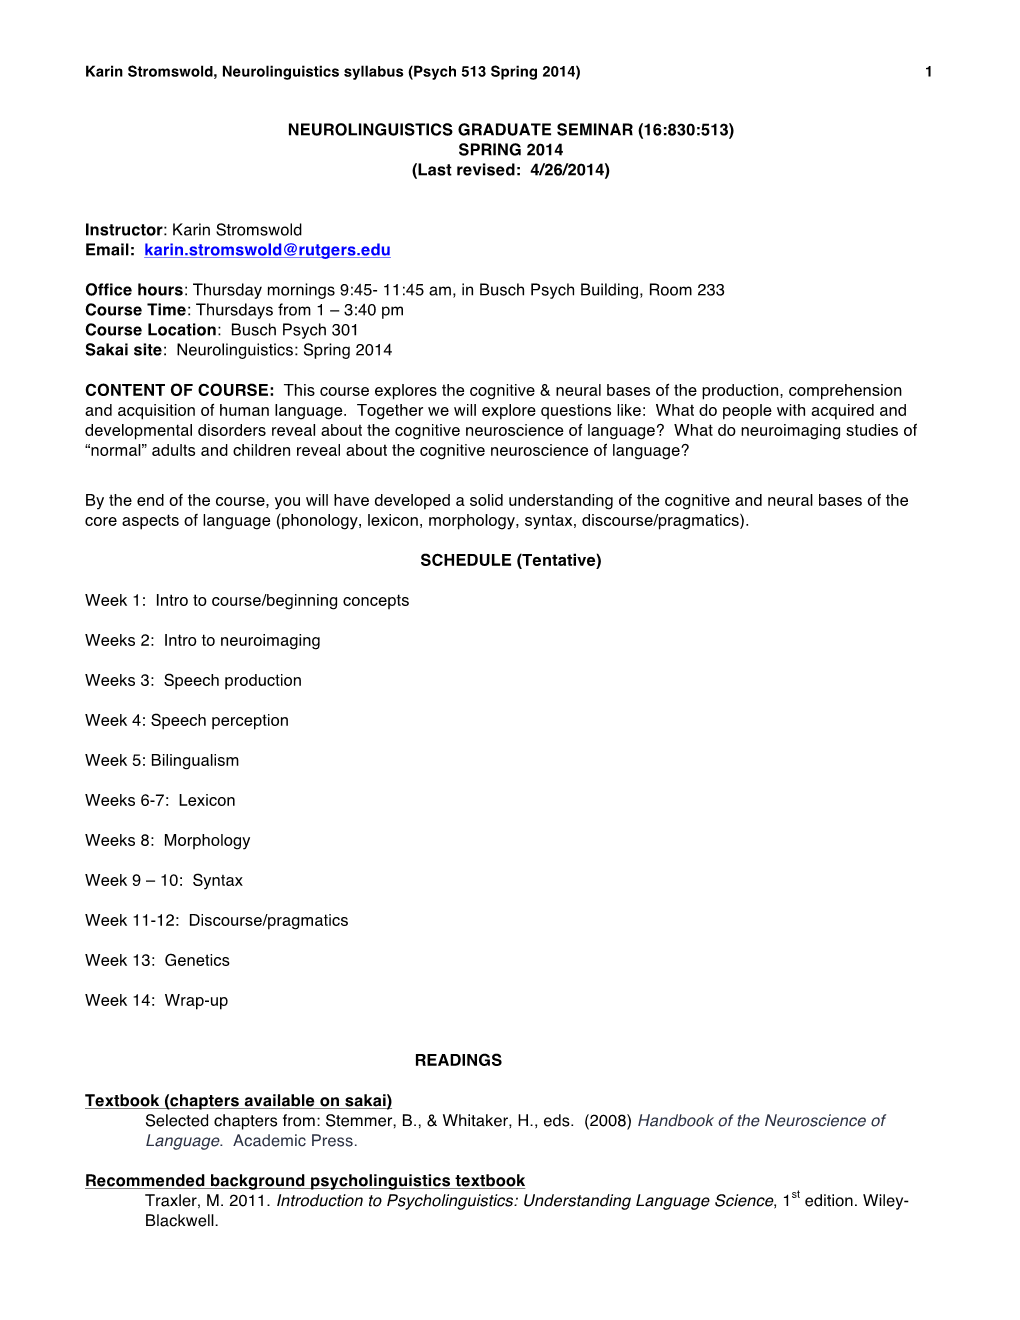 NEUROLINGUISTICS GRADUATE SEMINAR (16:830:513) SPRING 2014 (Last Revised: 4/26/2014)